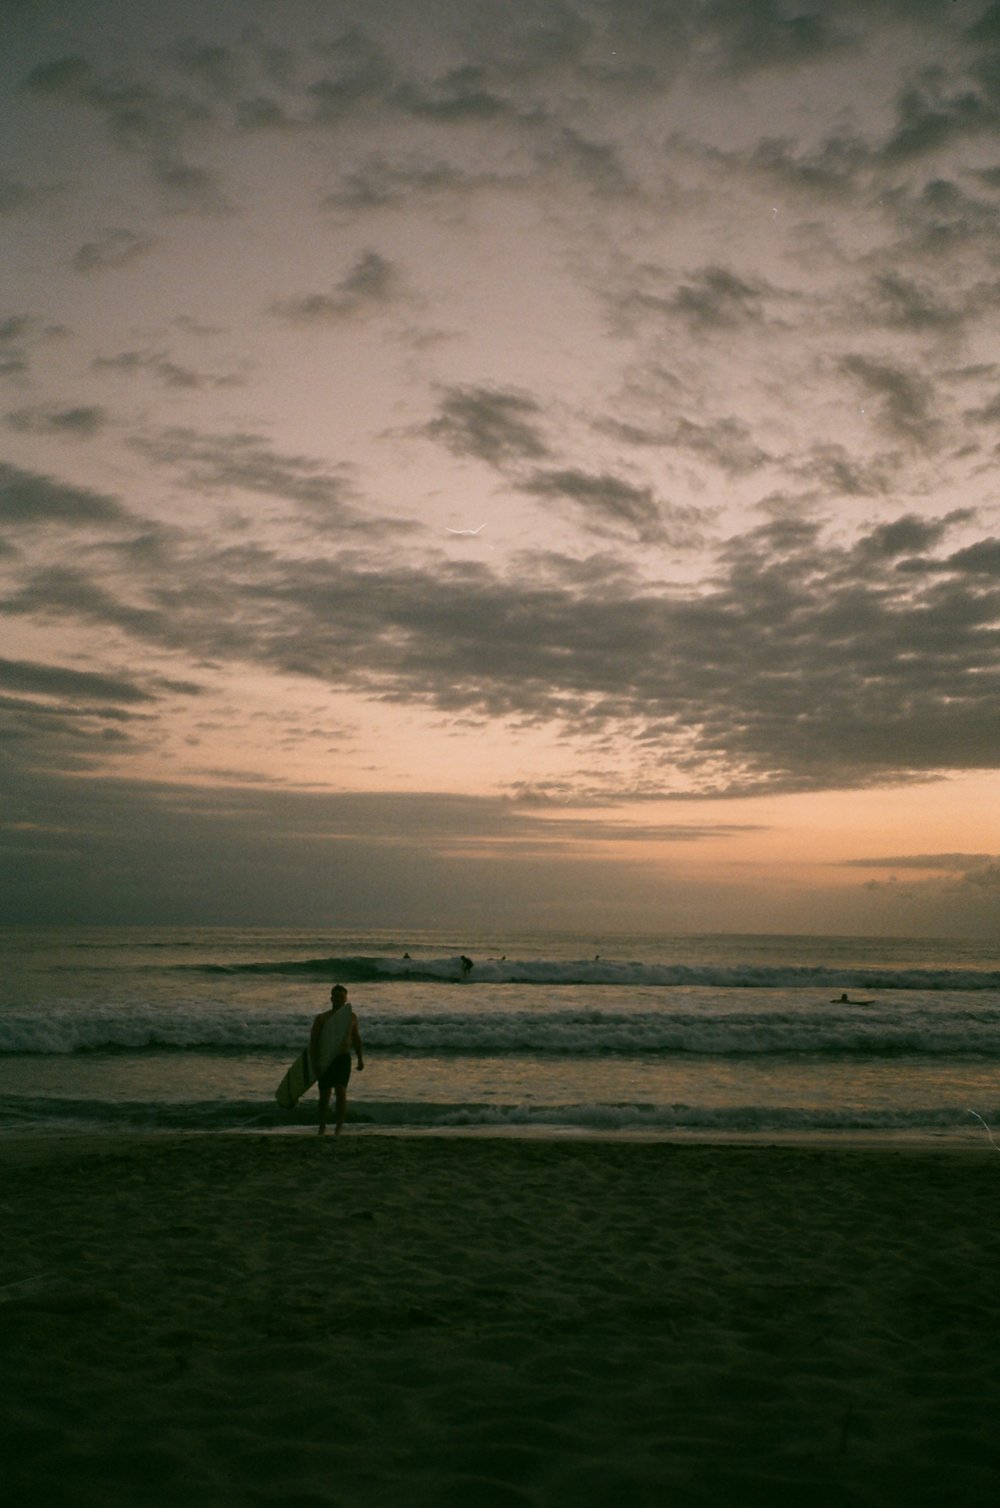 costa-rica-surfing-beach-surf-film-diaries-000975670019.jpg